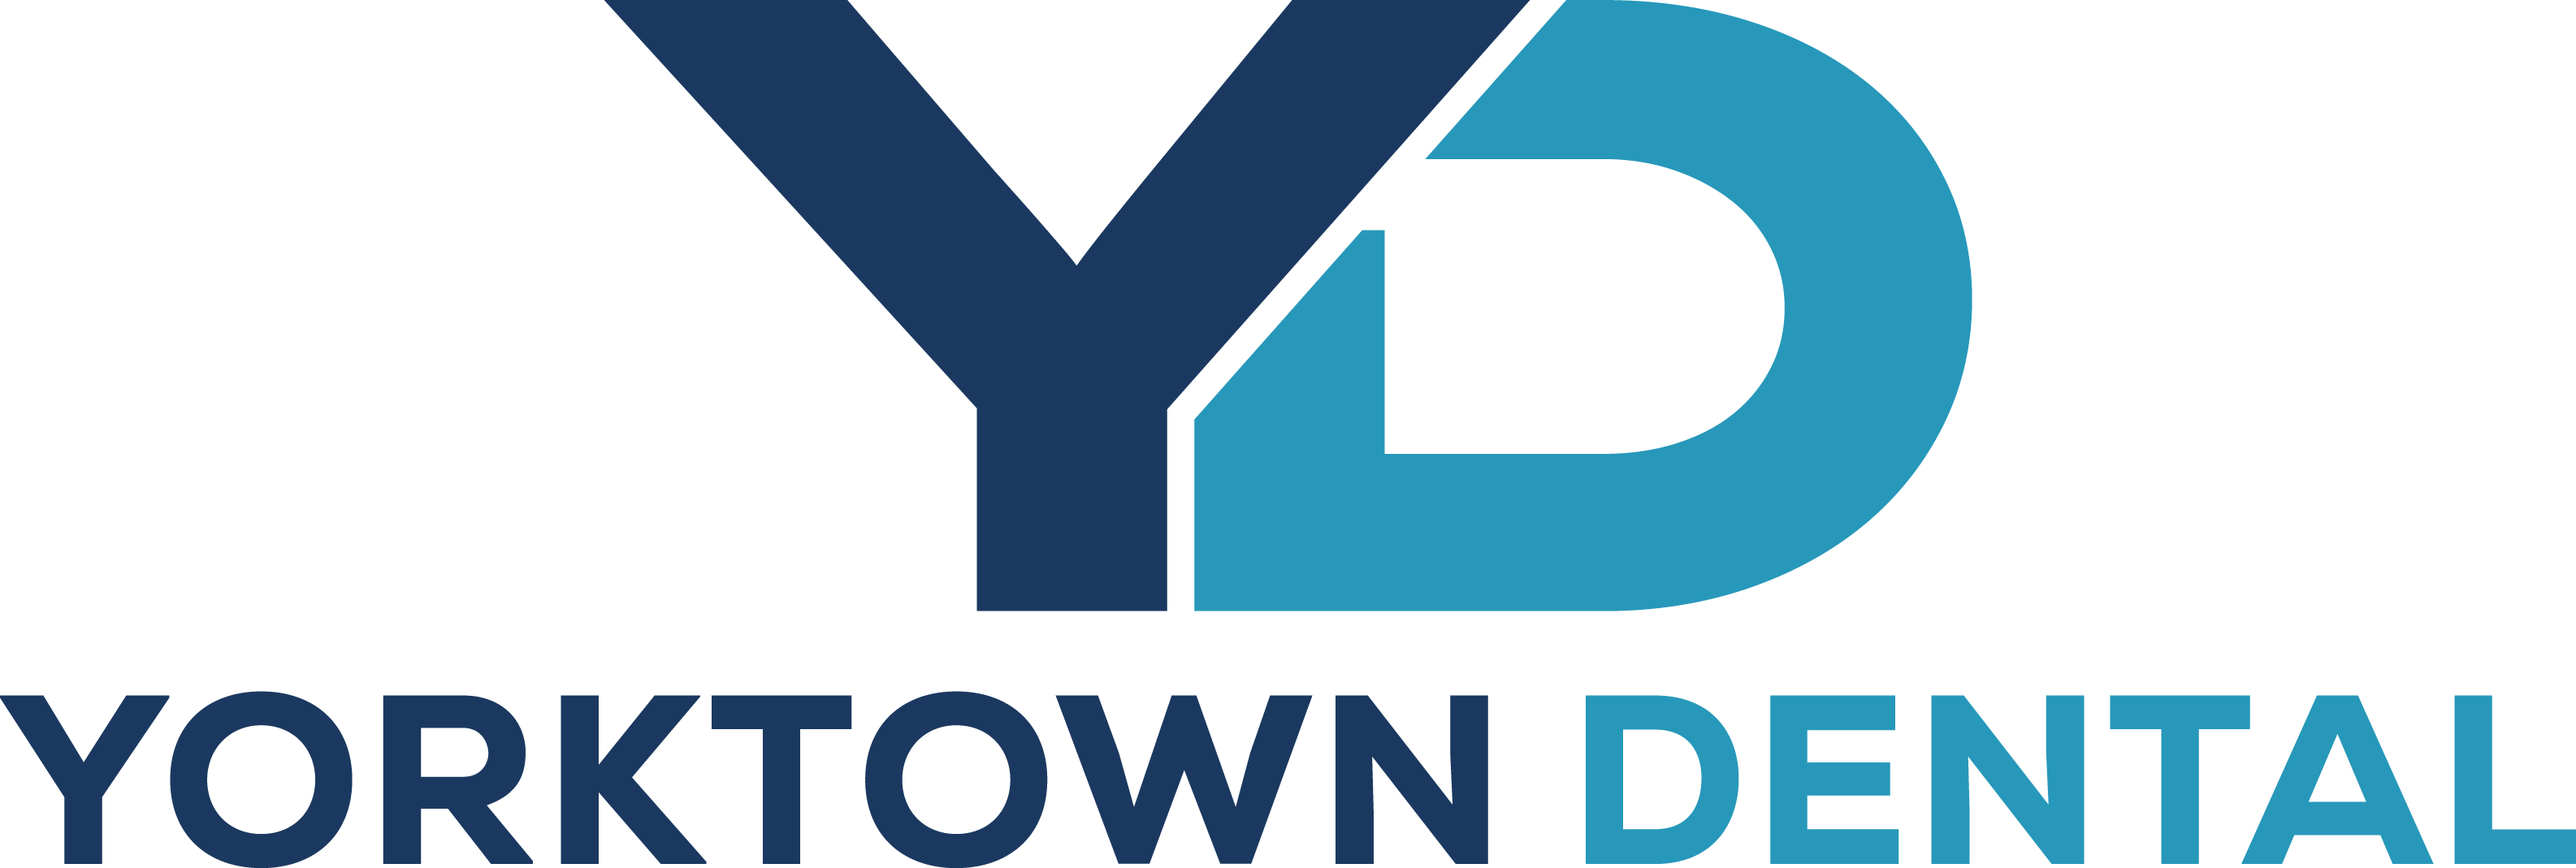 Yorktown Logo - Contact Yorktown Dentist - Dr. Duman